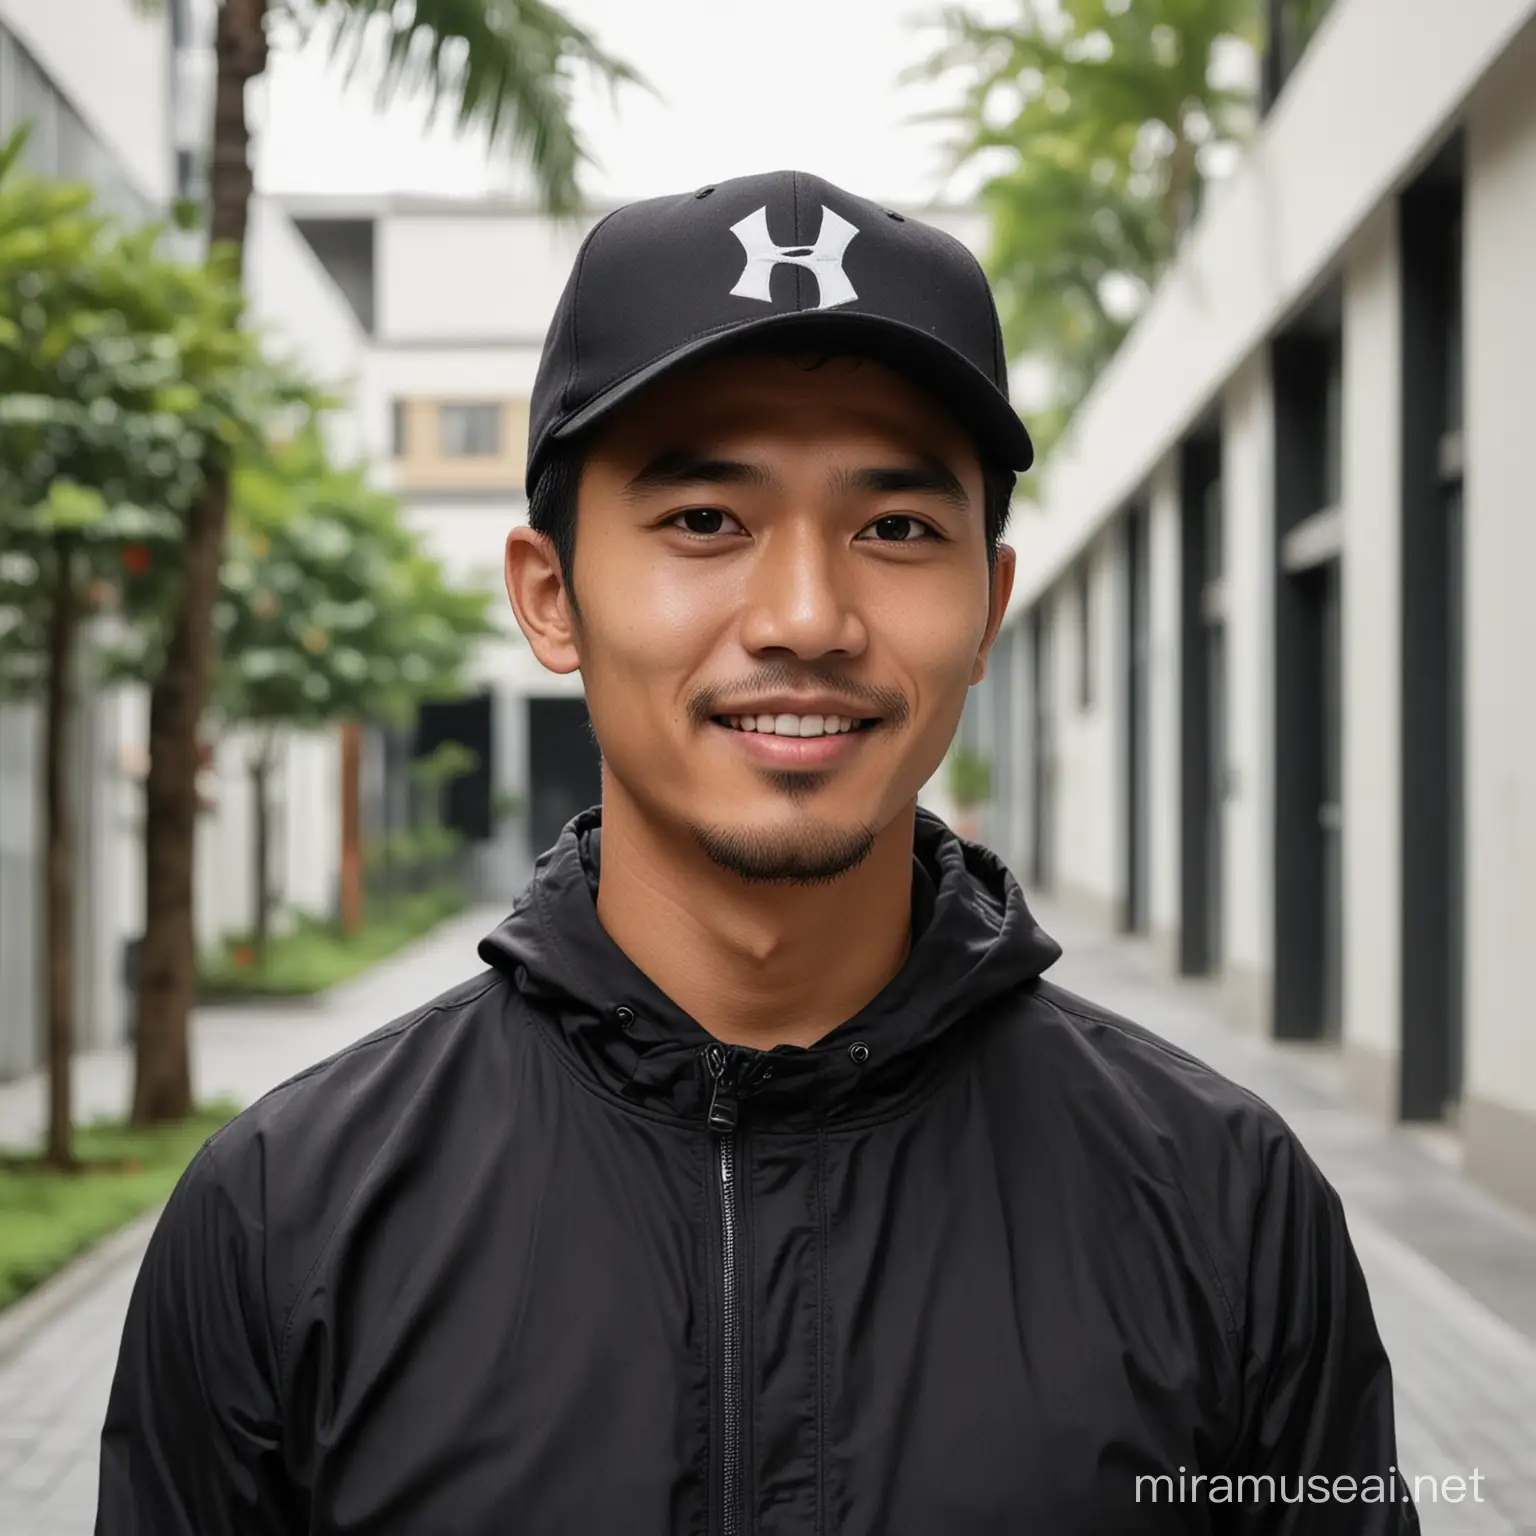 Pria Indonesia umur 30 tahun,pakai topi basket,pakai jaket hitam,lokasi halaman kantor